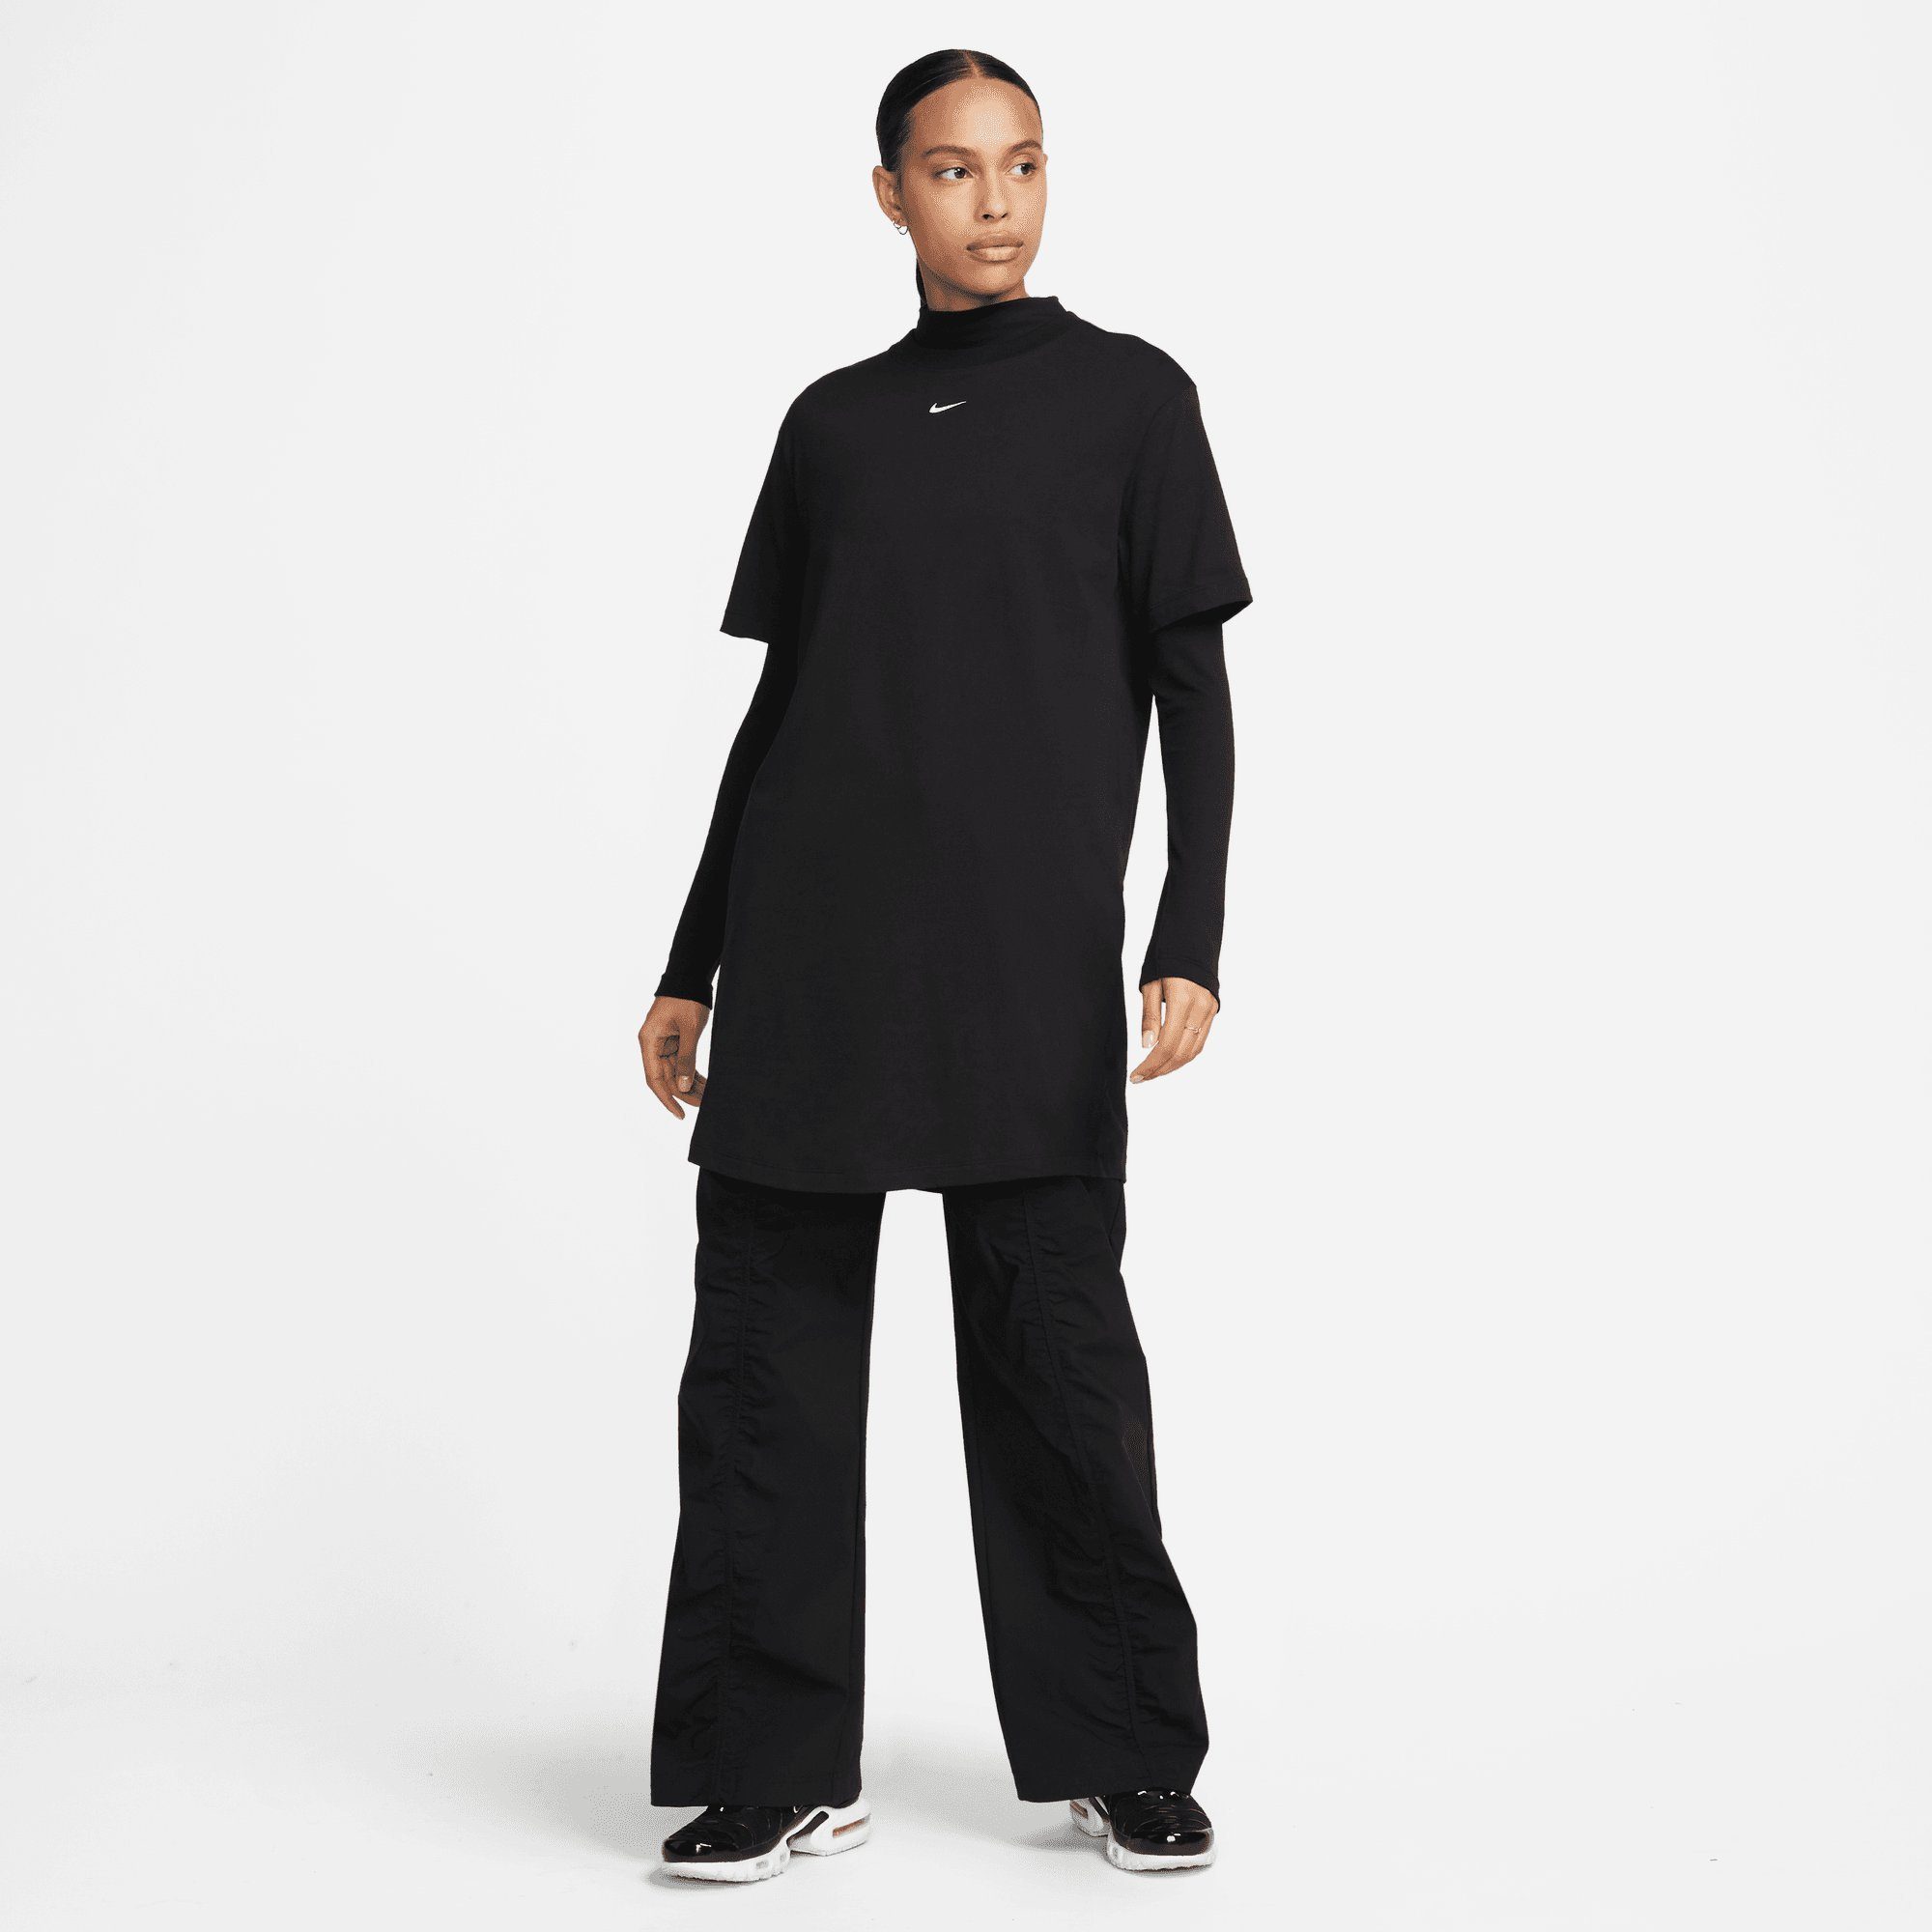 ESSENTIAL Sportswear DRESS WOMEN'S BLACK/WHITE Sommerkleid SHORT-SLEEVE Nike